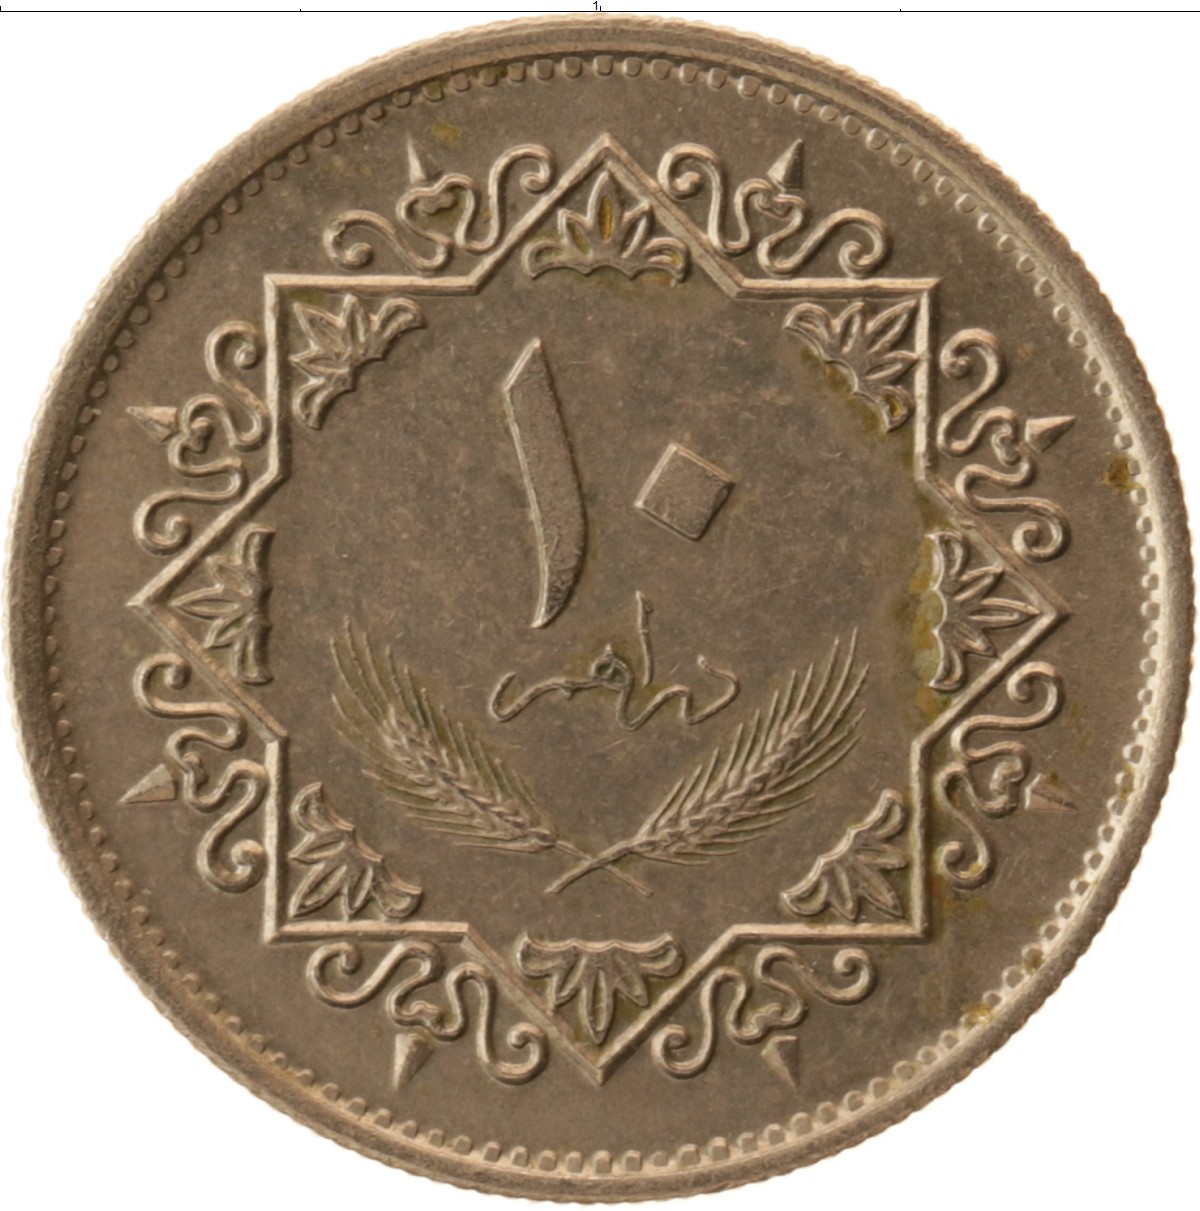 24 дирхам. Ливия 100 дирхамов 2014. Монеты Ливия. Монета Ливии 100 дирхам. Монета Ливия 10.